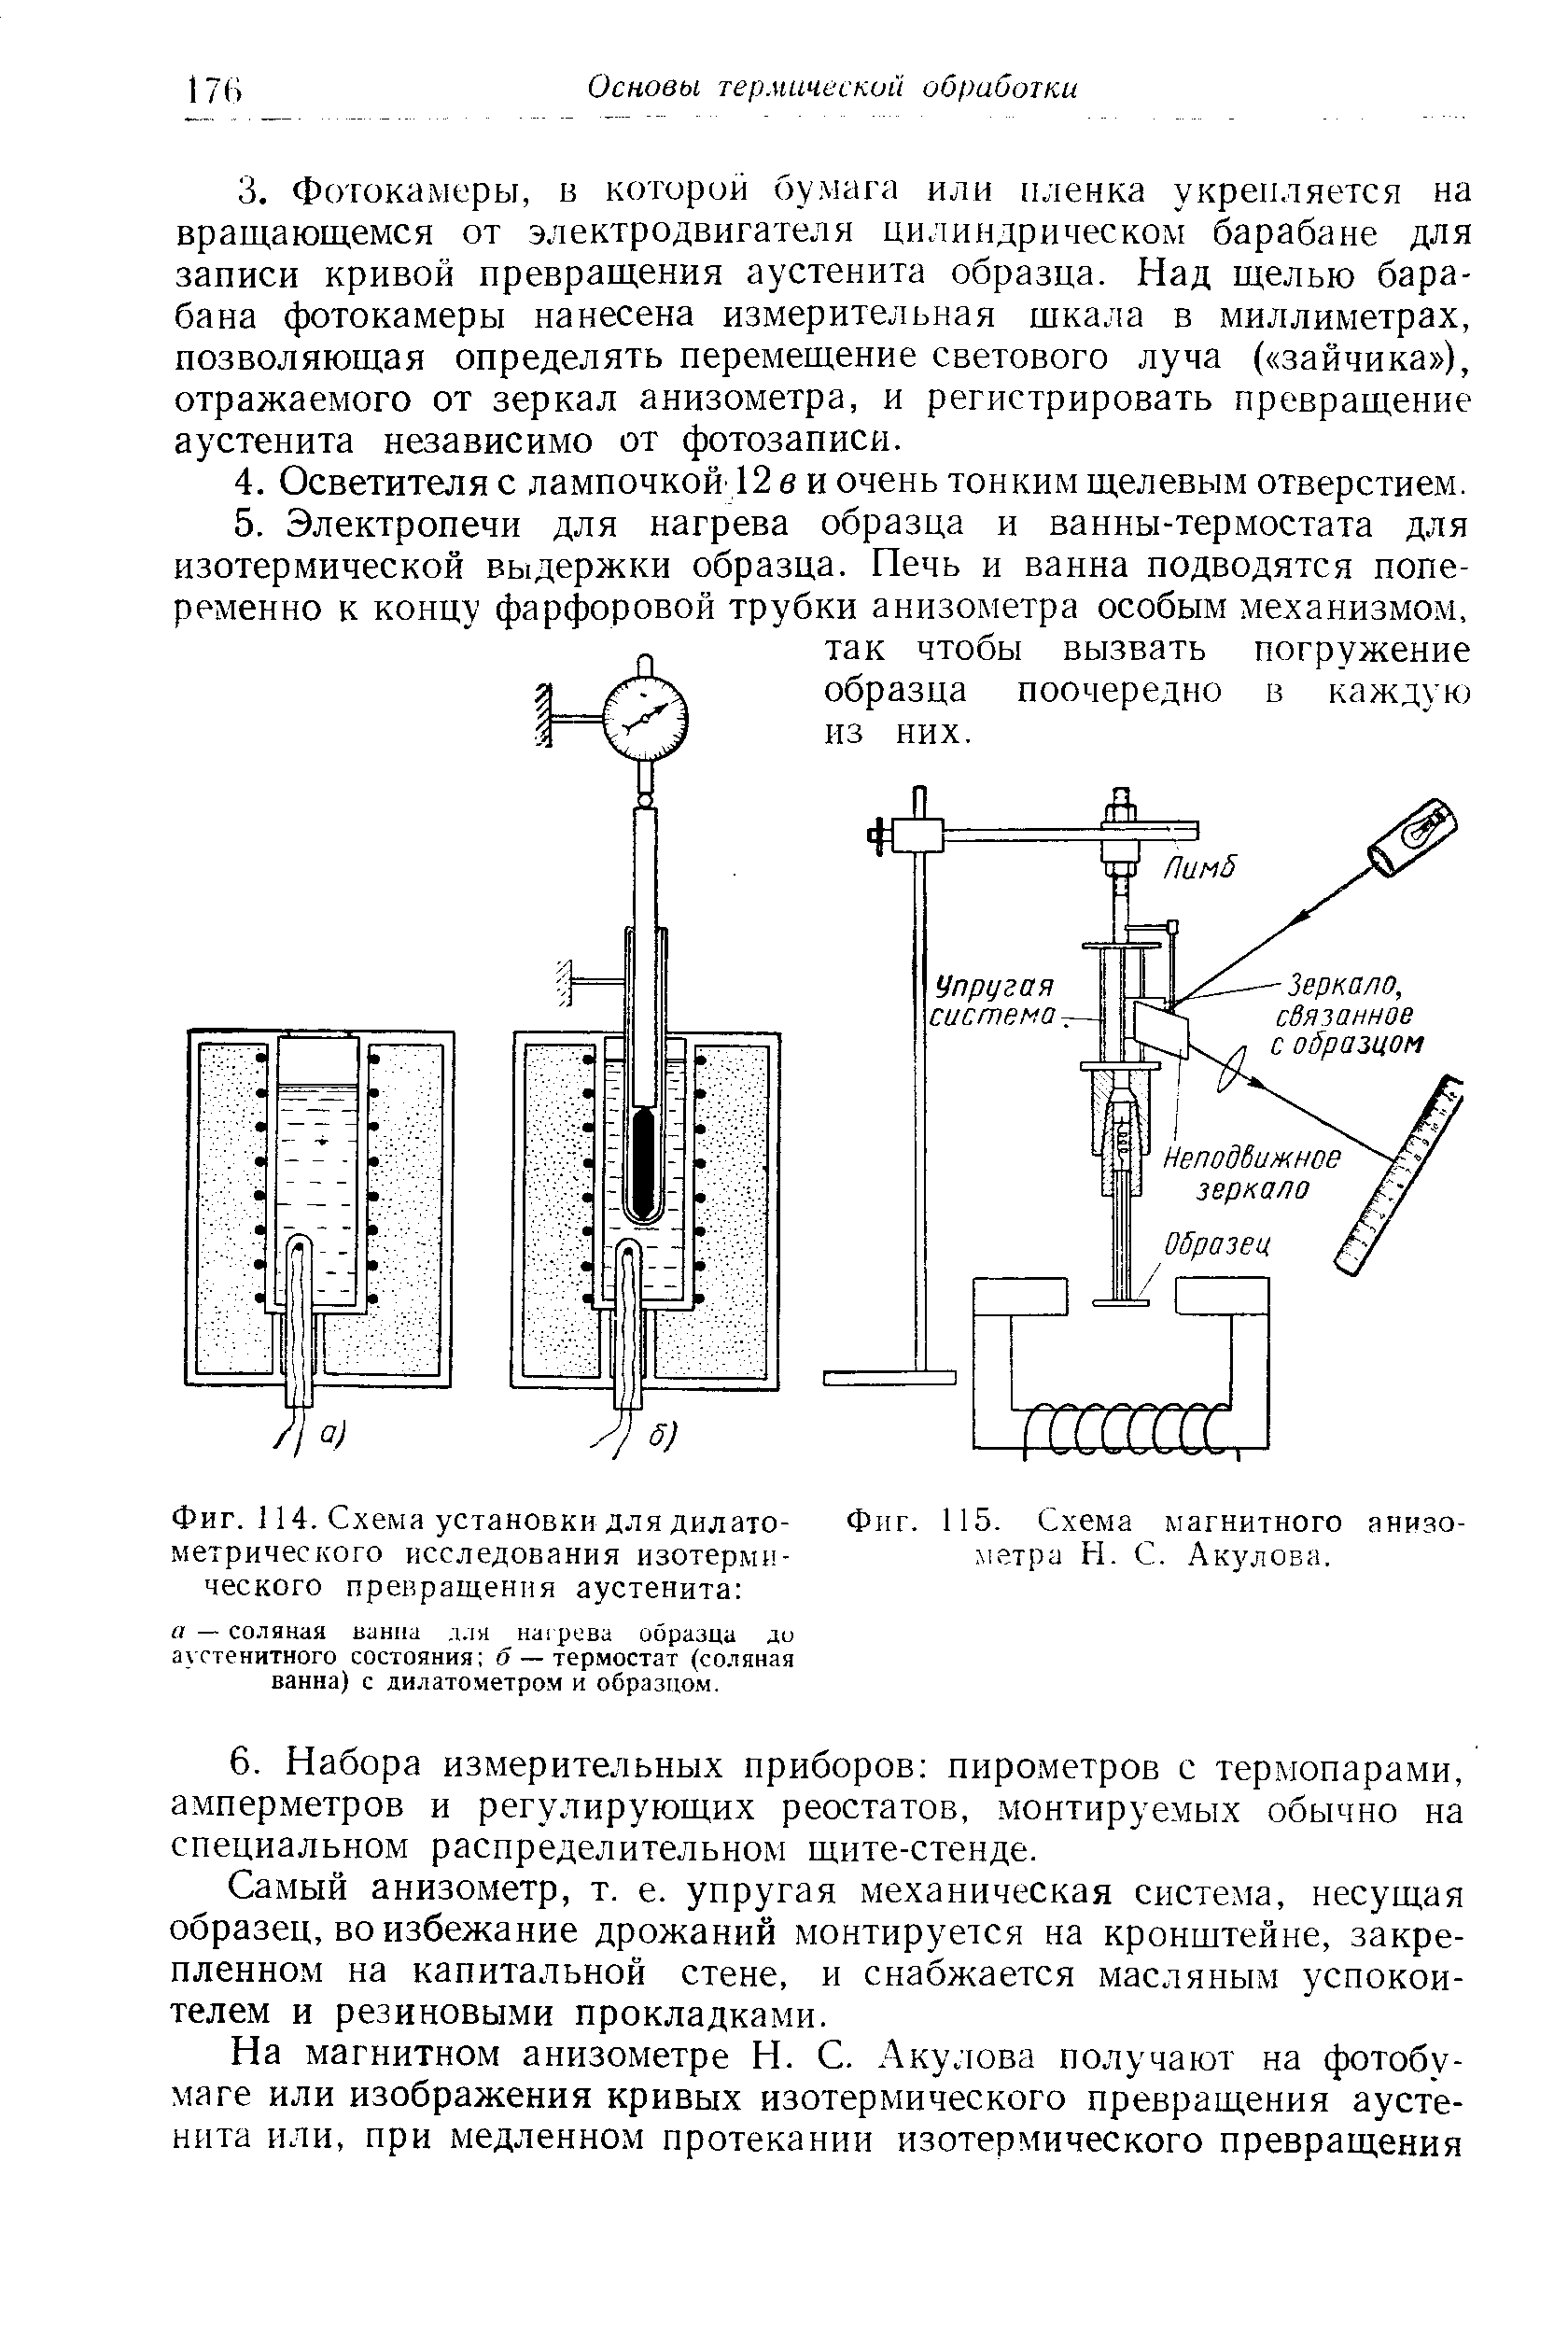 Фиг. 115. Схема магнитного анизометра Н. С. Акулова.
